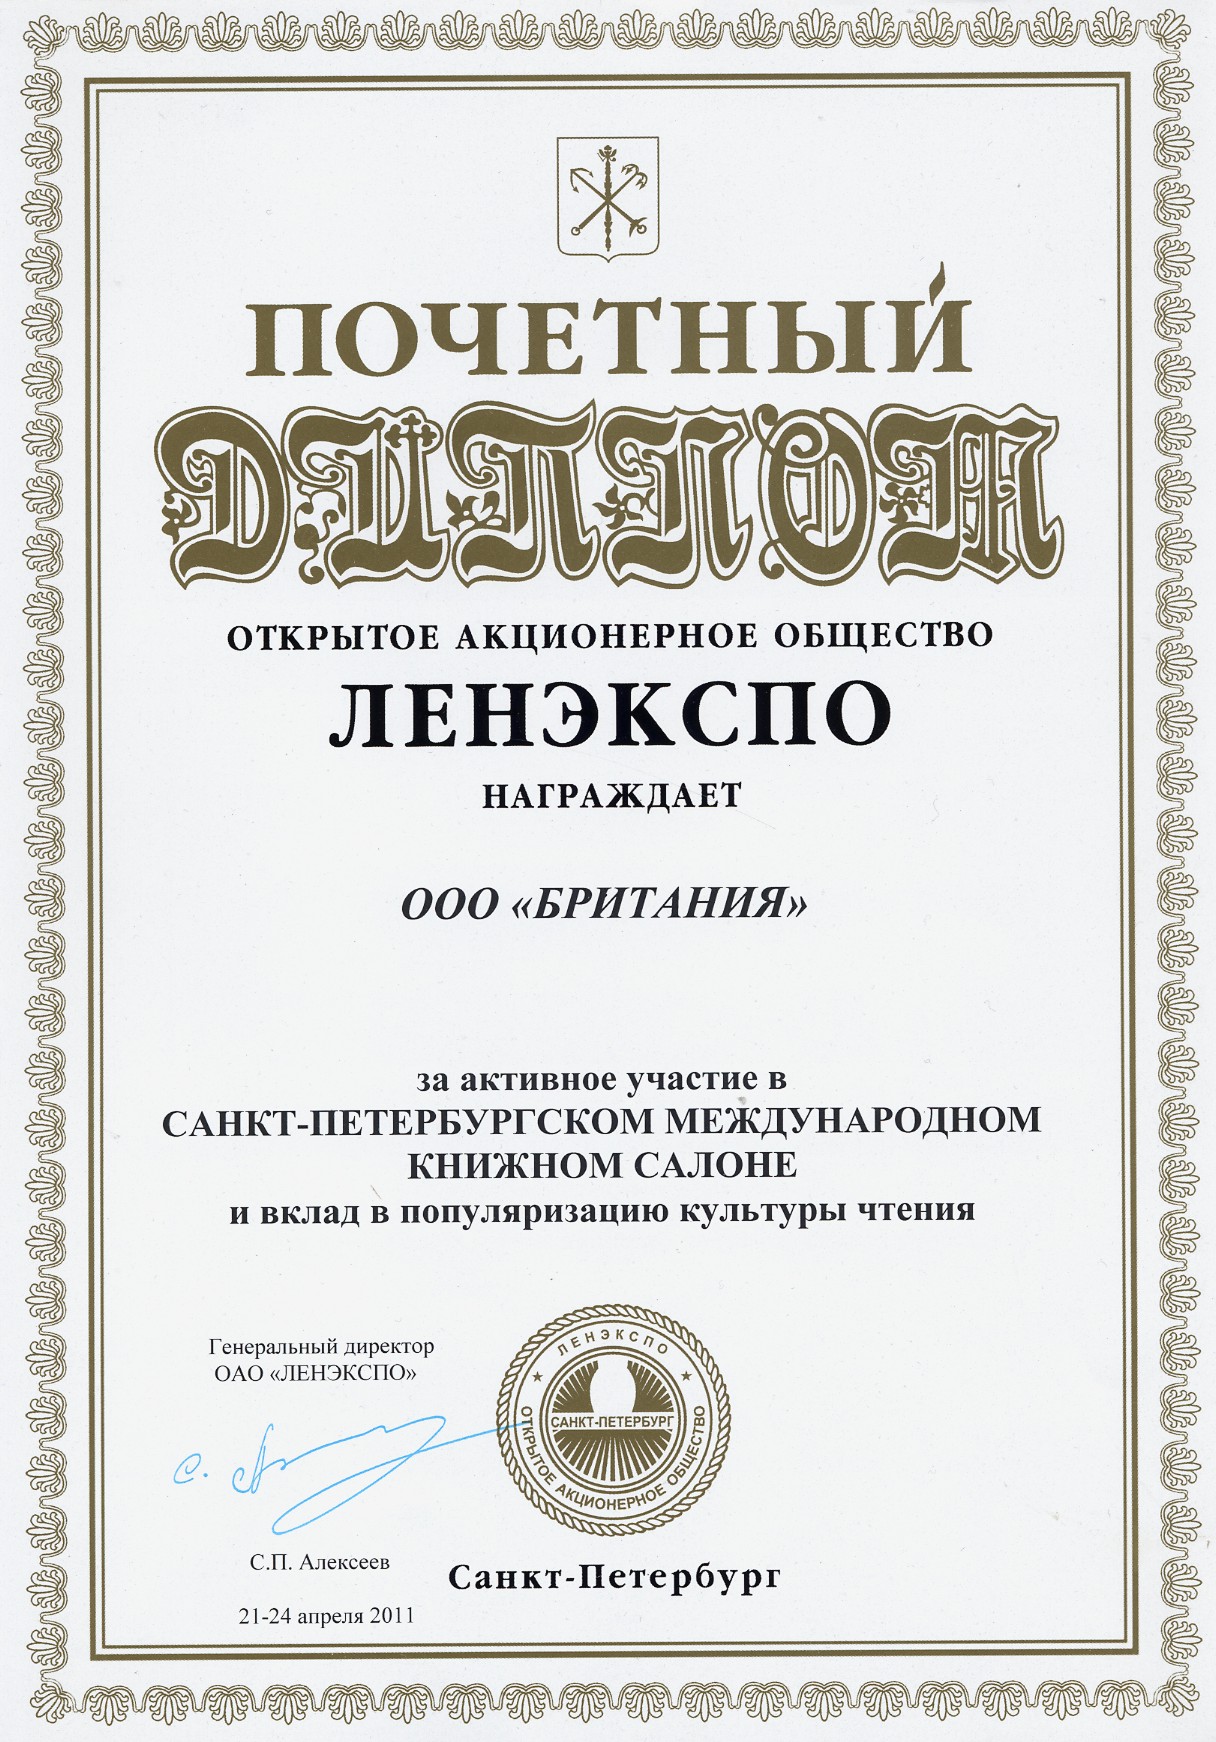 Book Salon Certificate